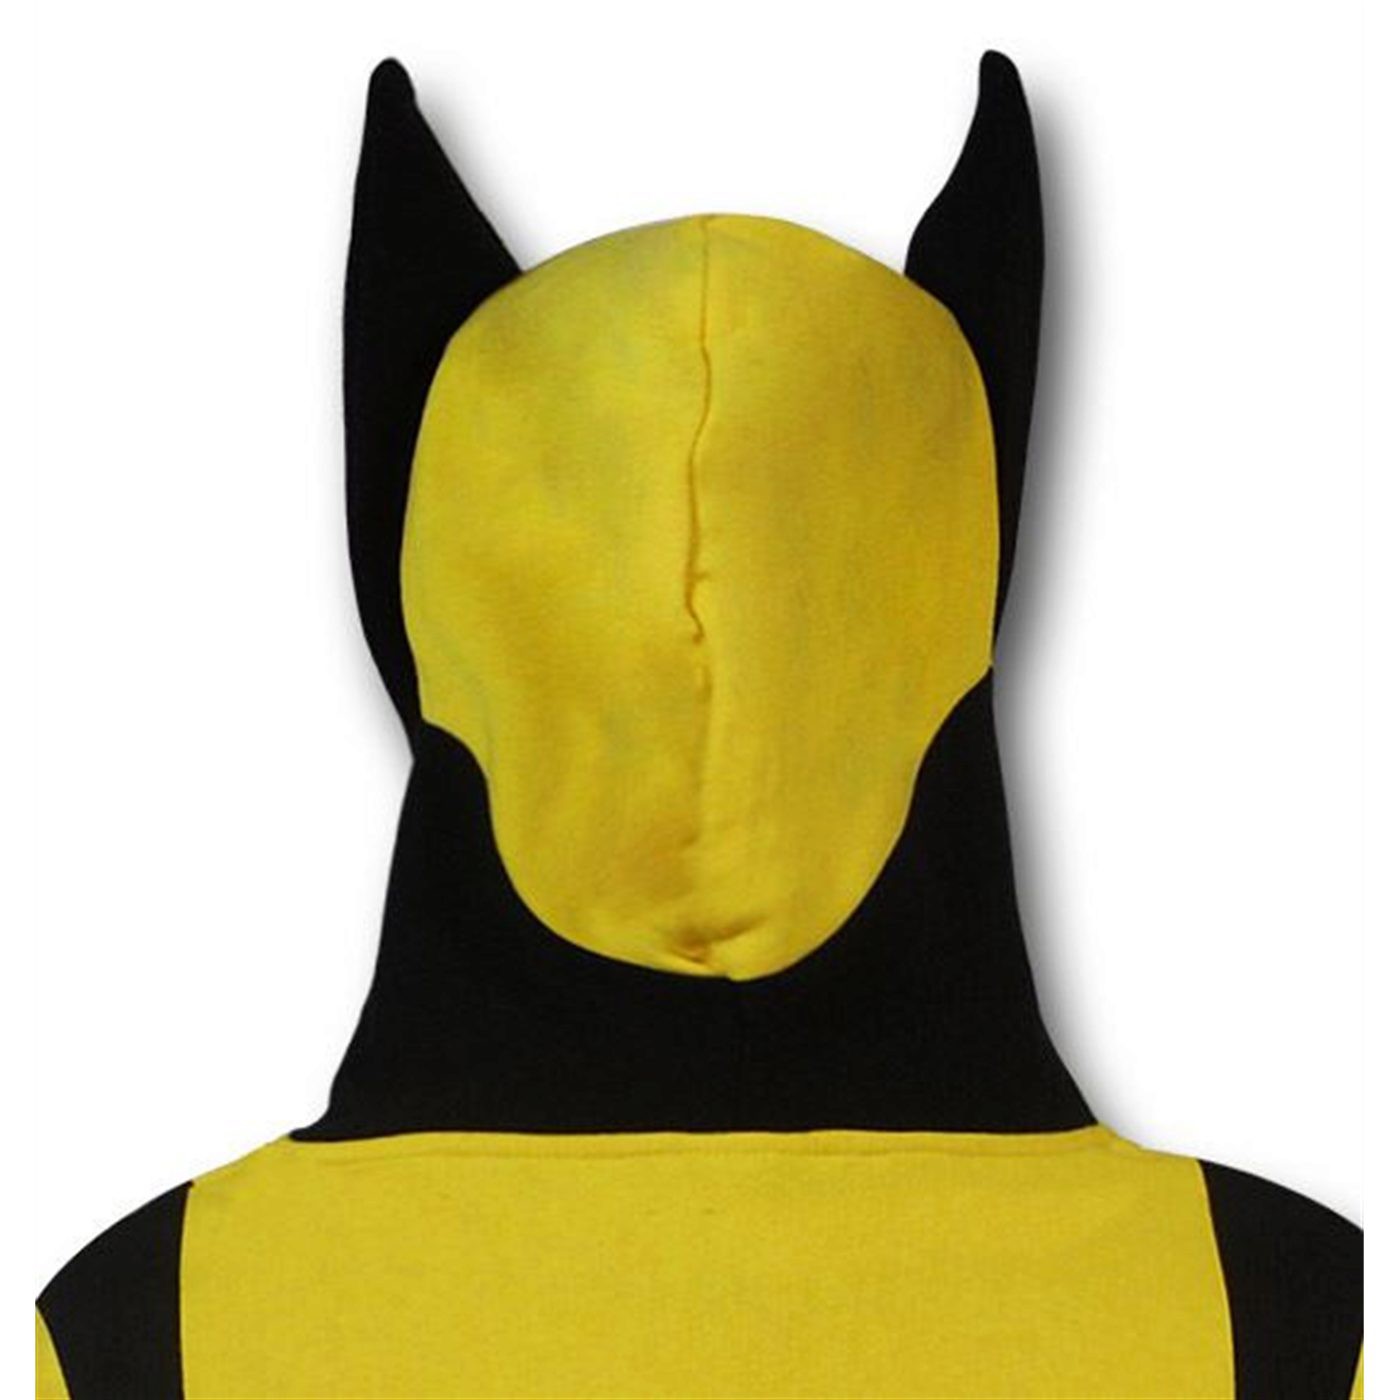 Wolverine Men's Classic Costume Hoodie